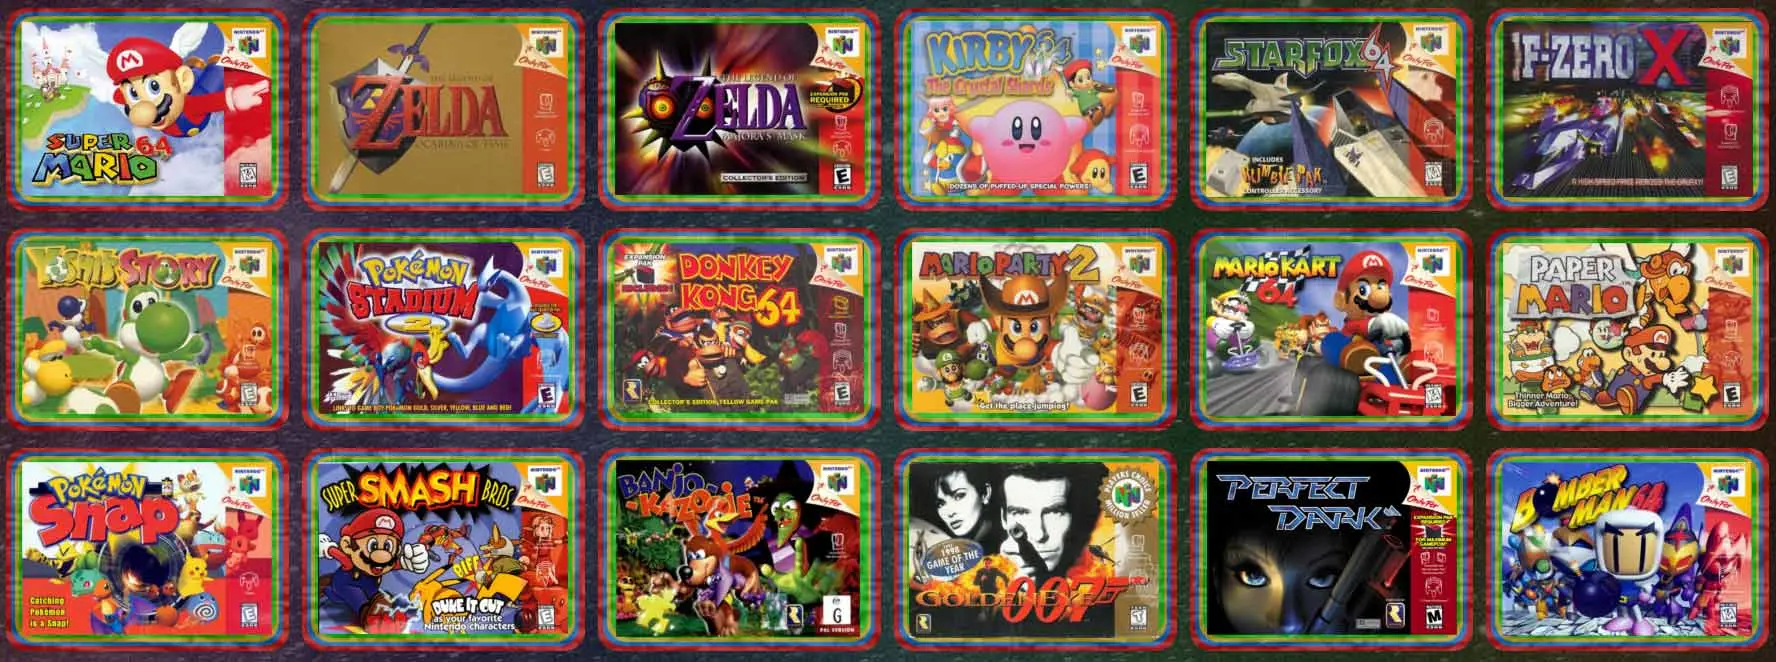 Nintendo 64 Classic Edition potential games lineup